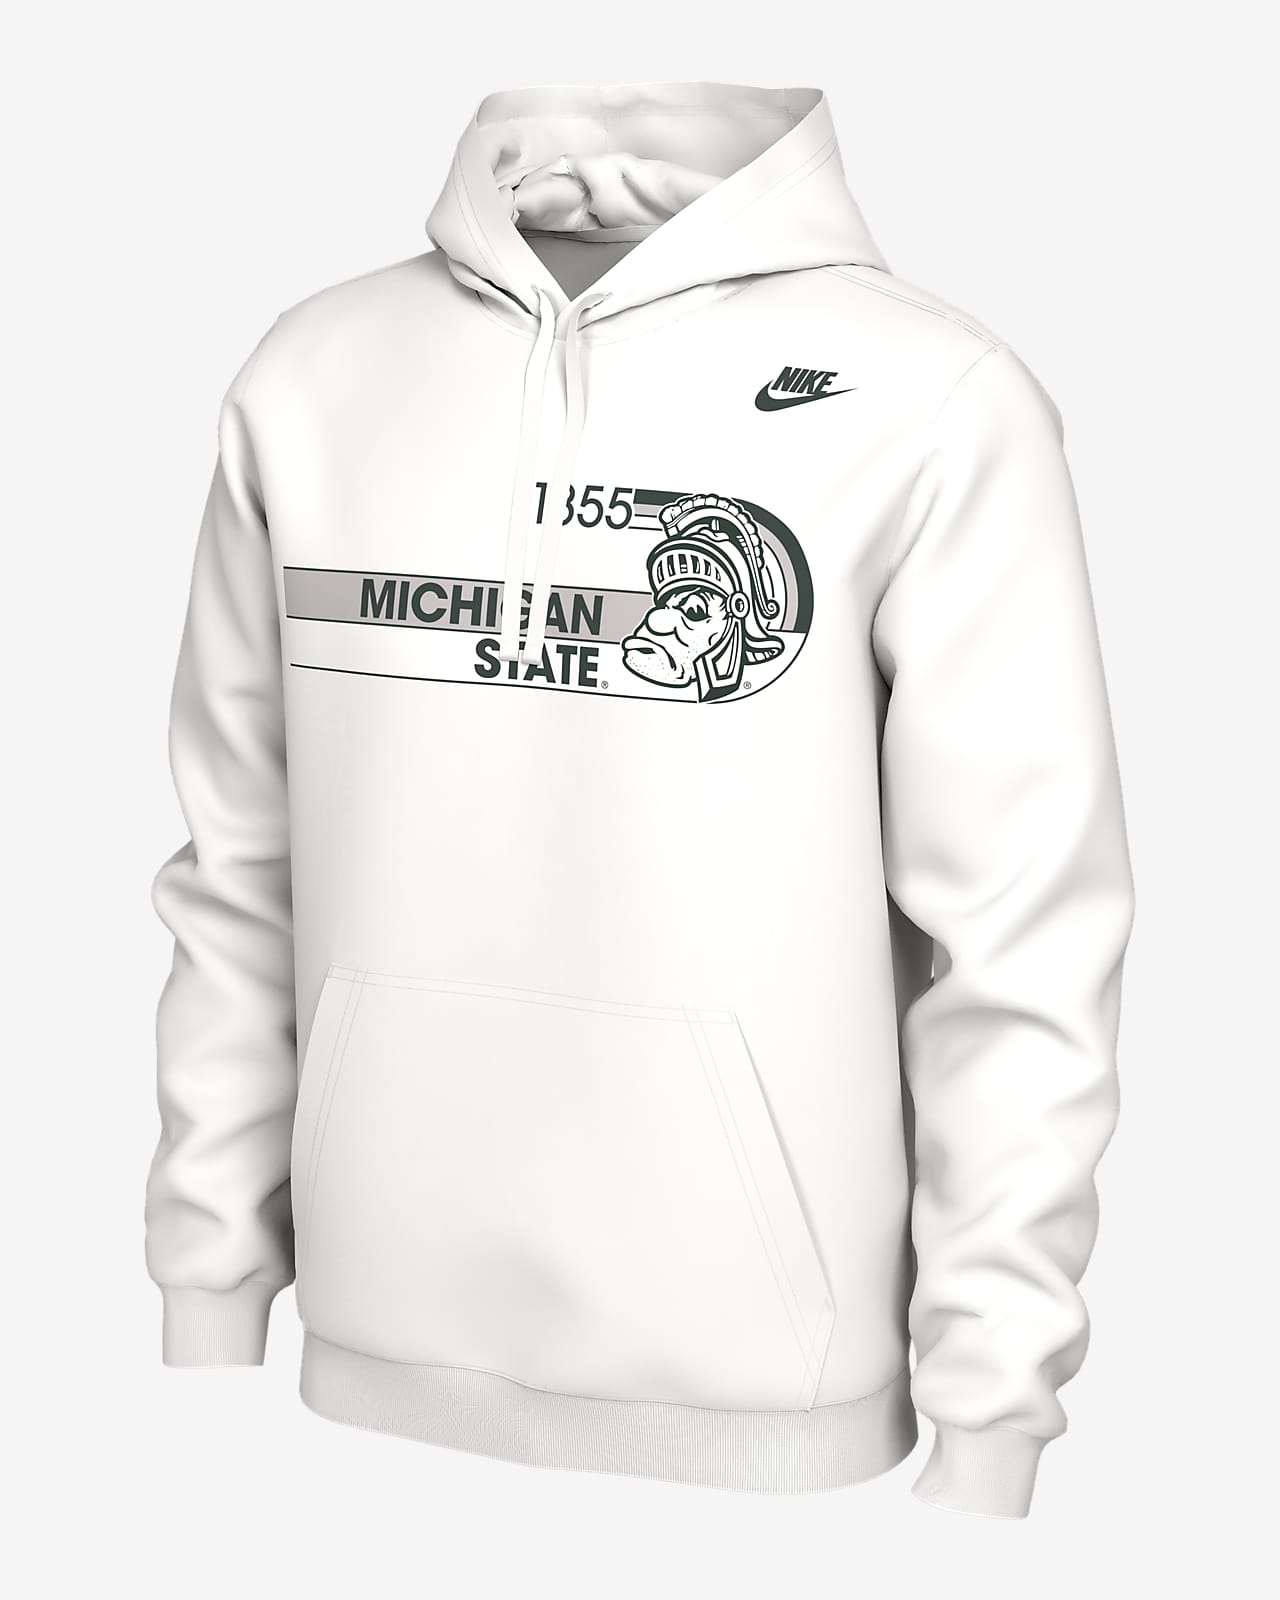 Michigan State University Nike Full-Zip Jacket, Pullover Jacket